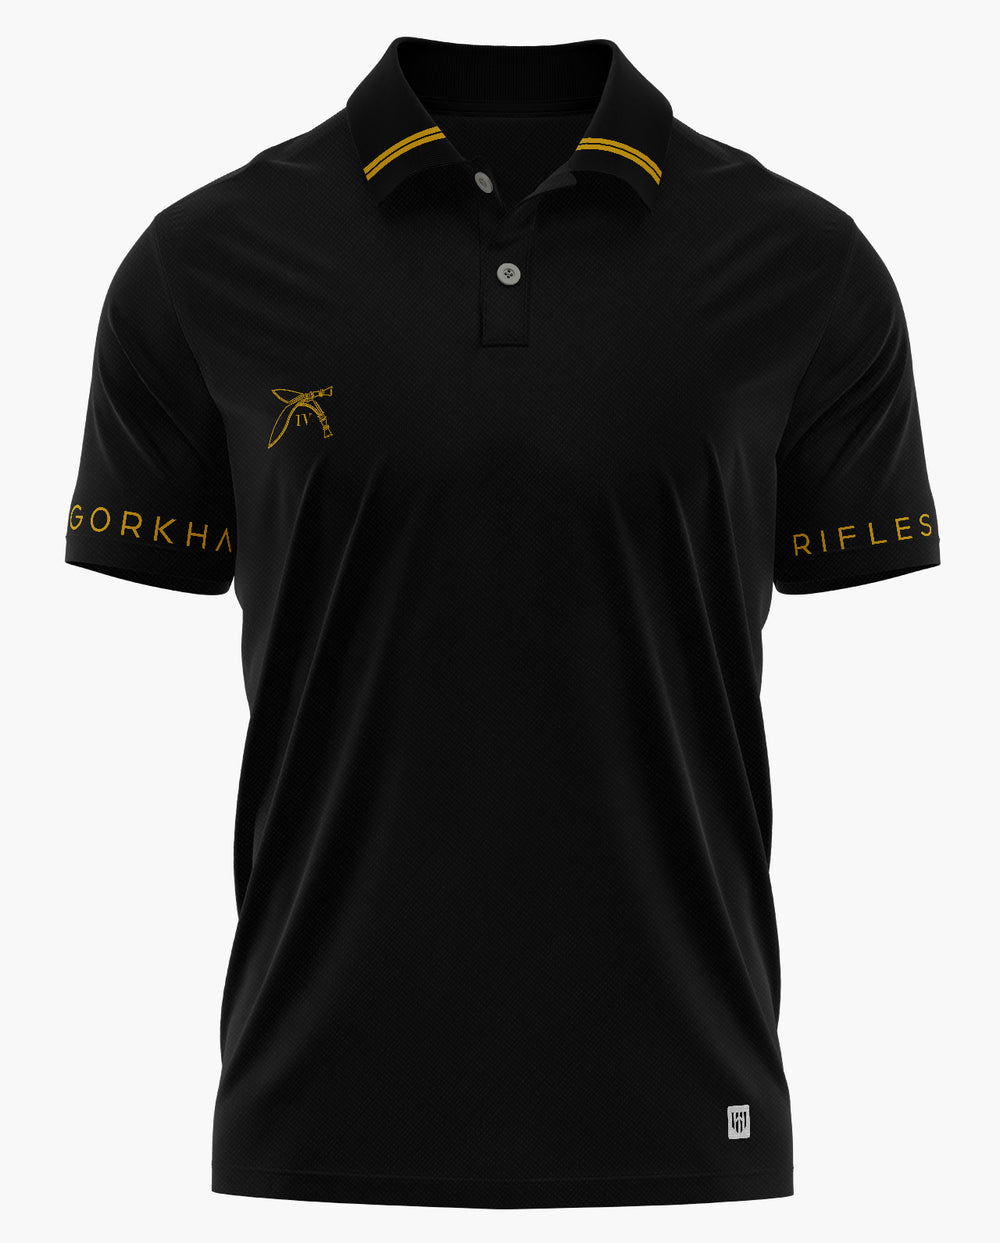 GORKHA COLLAR STRIPE Polo T-shirt - Aero Armour